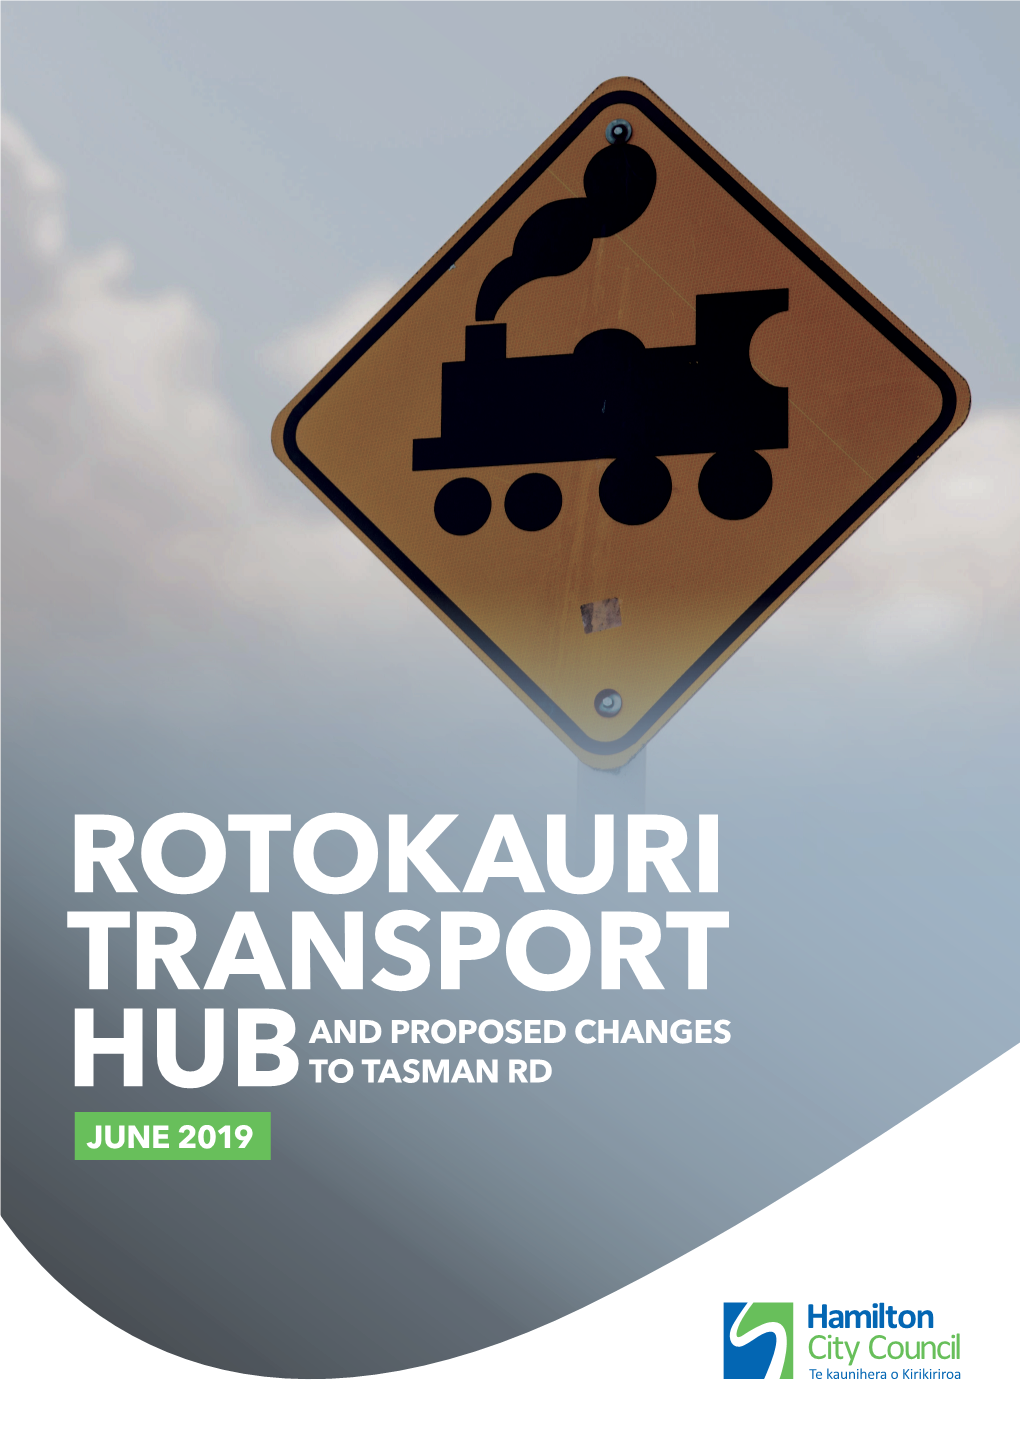 Rotokauri Transport and Proposed Changes Hub to Tasman Rd June 2019